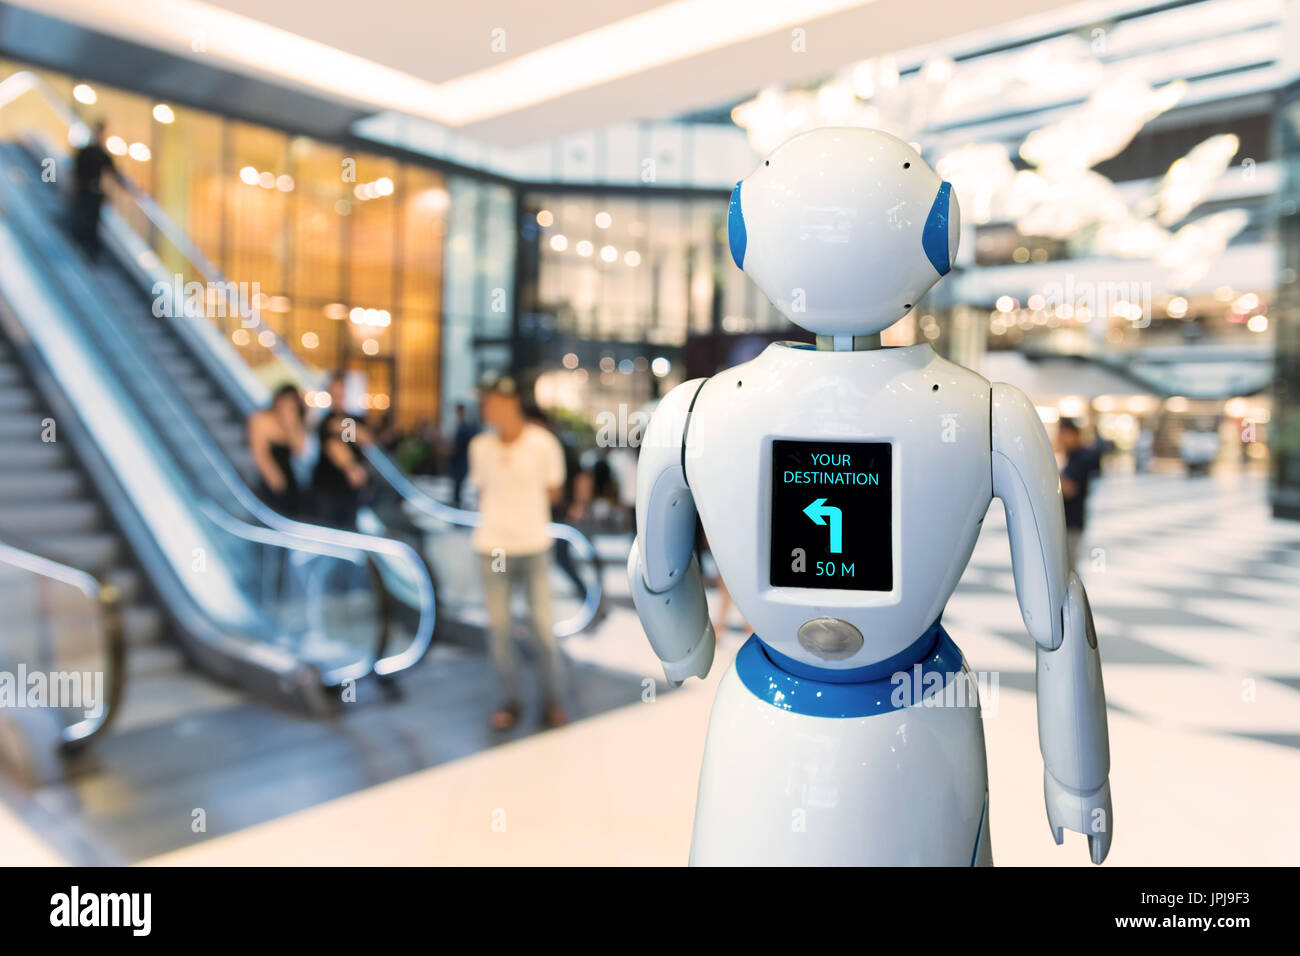 Retail , inteligente robot ayudante , robo advisor tecnología robot de navegación en el almacén. Robot a pie de plomo para guiar al cliente a su destino Foto de stock